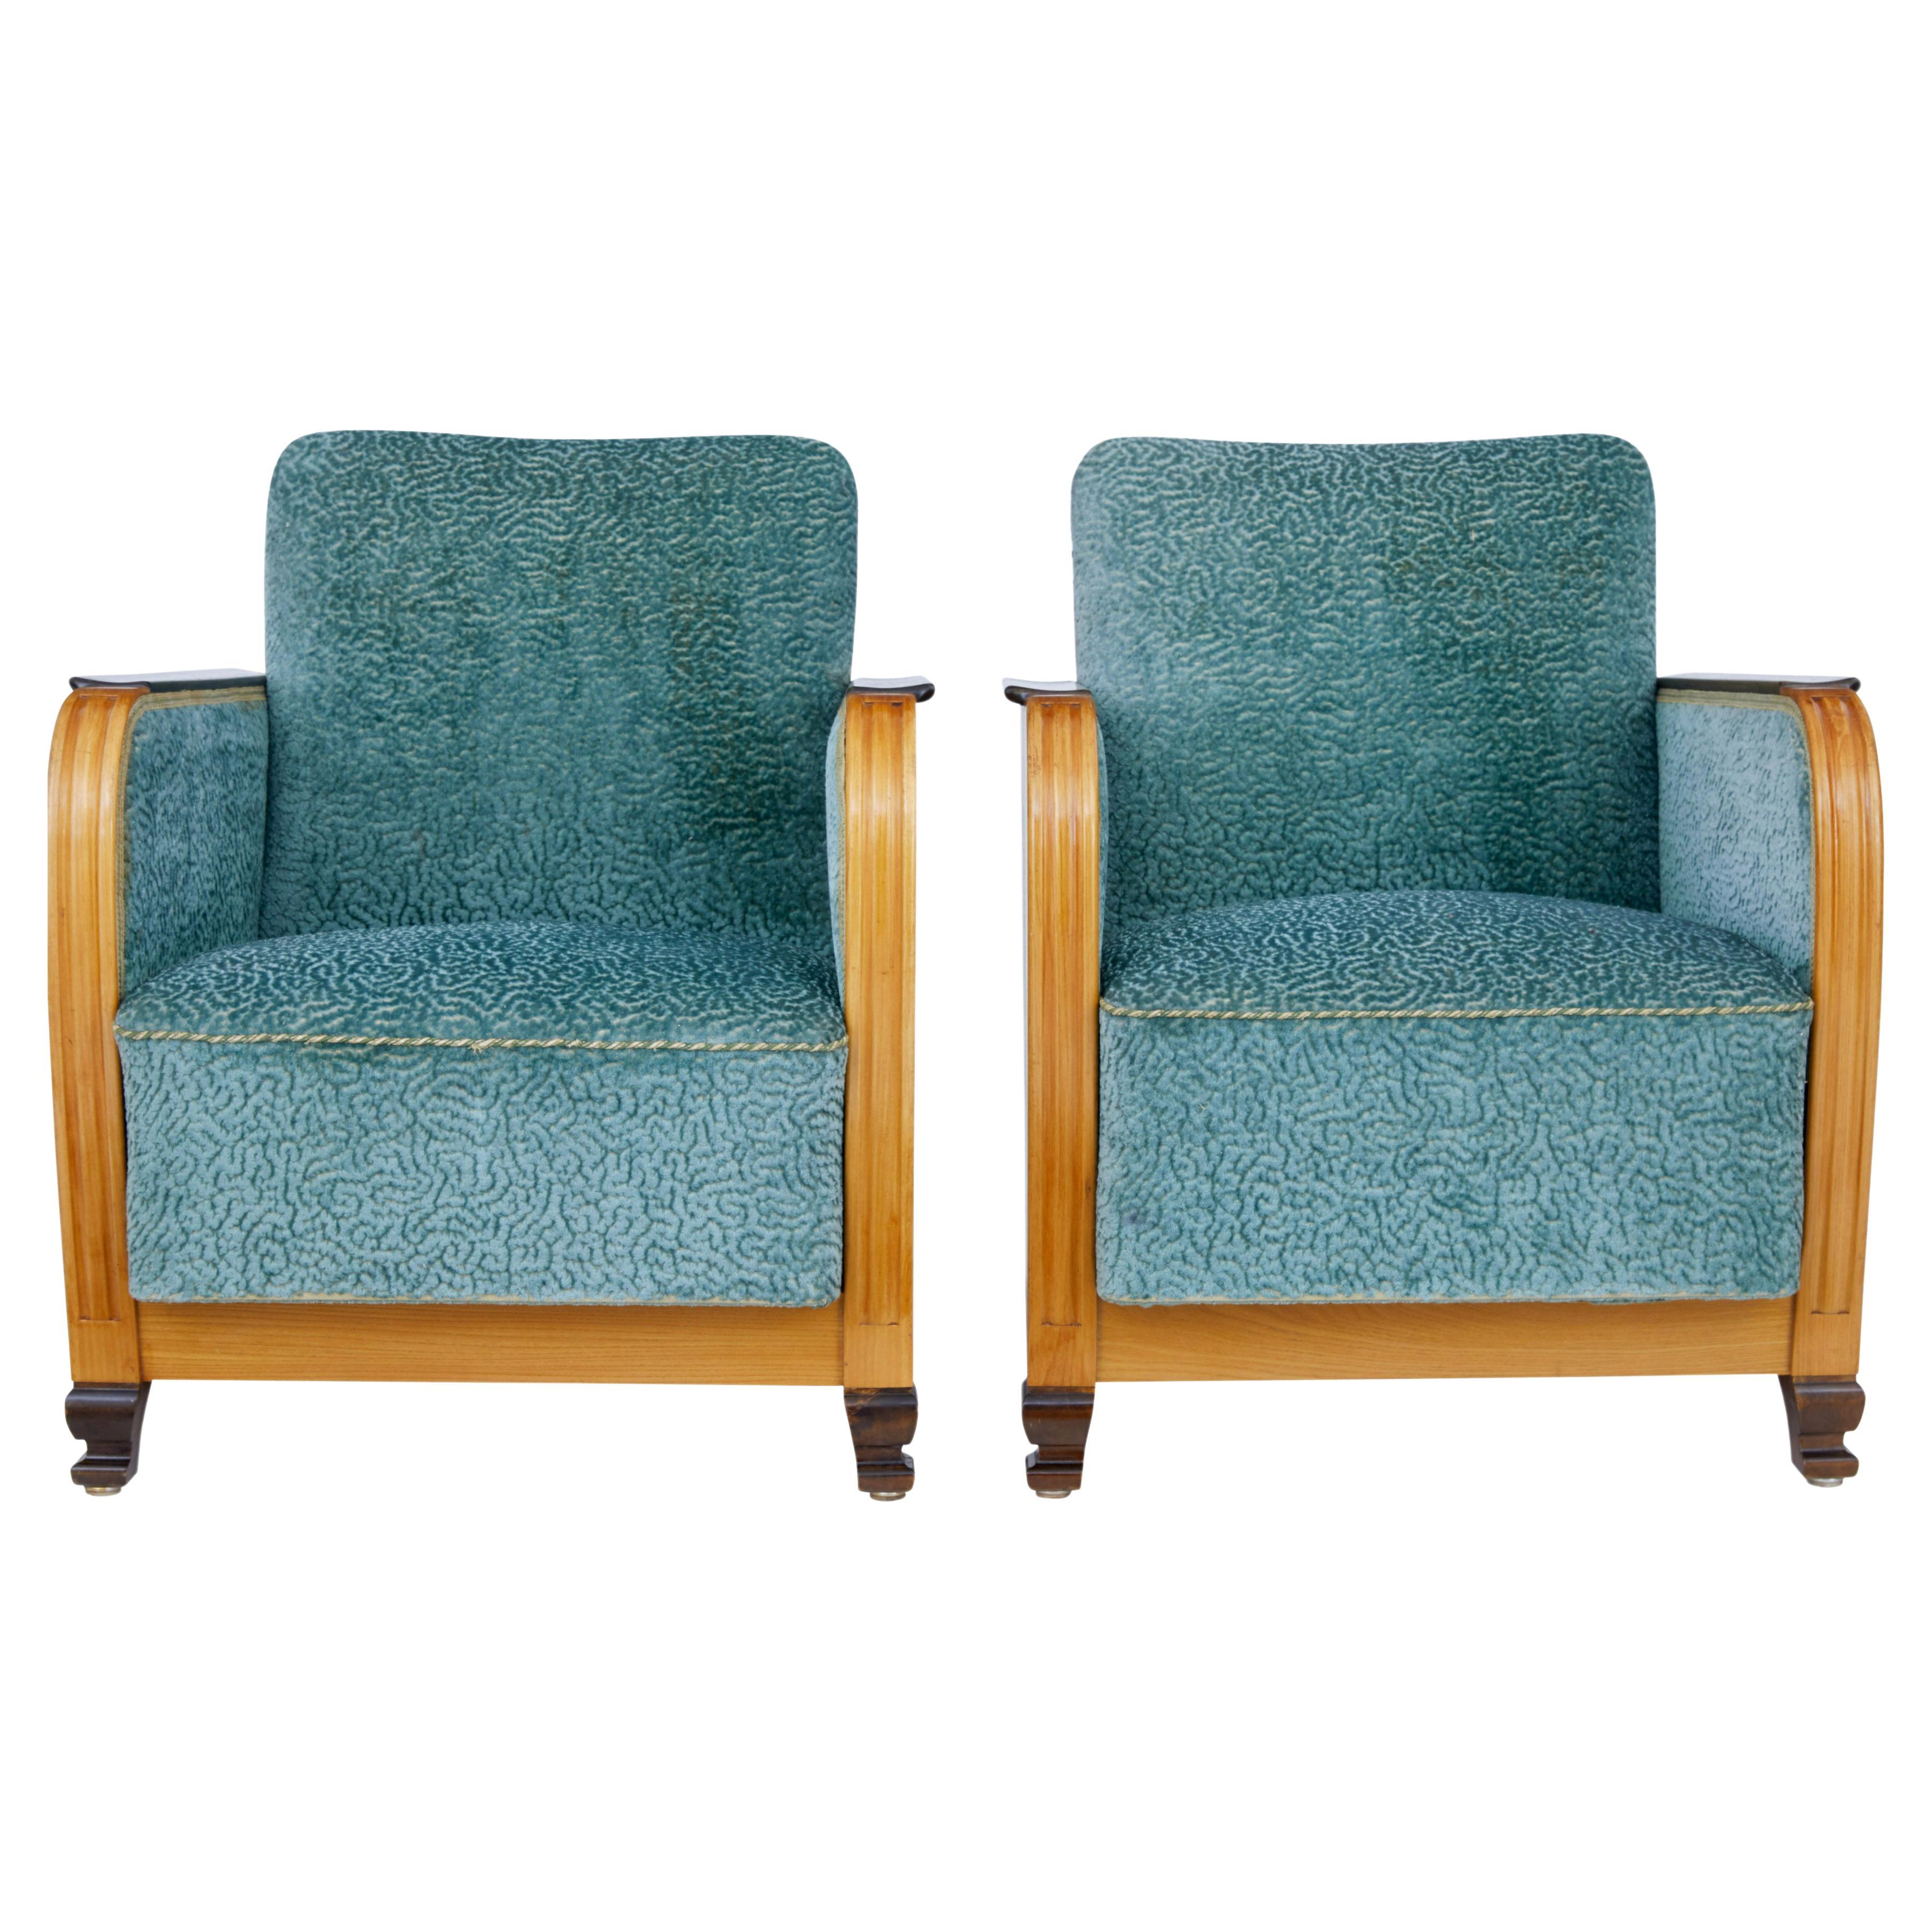 Fine pair of Swedish elm and birch armchairs